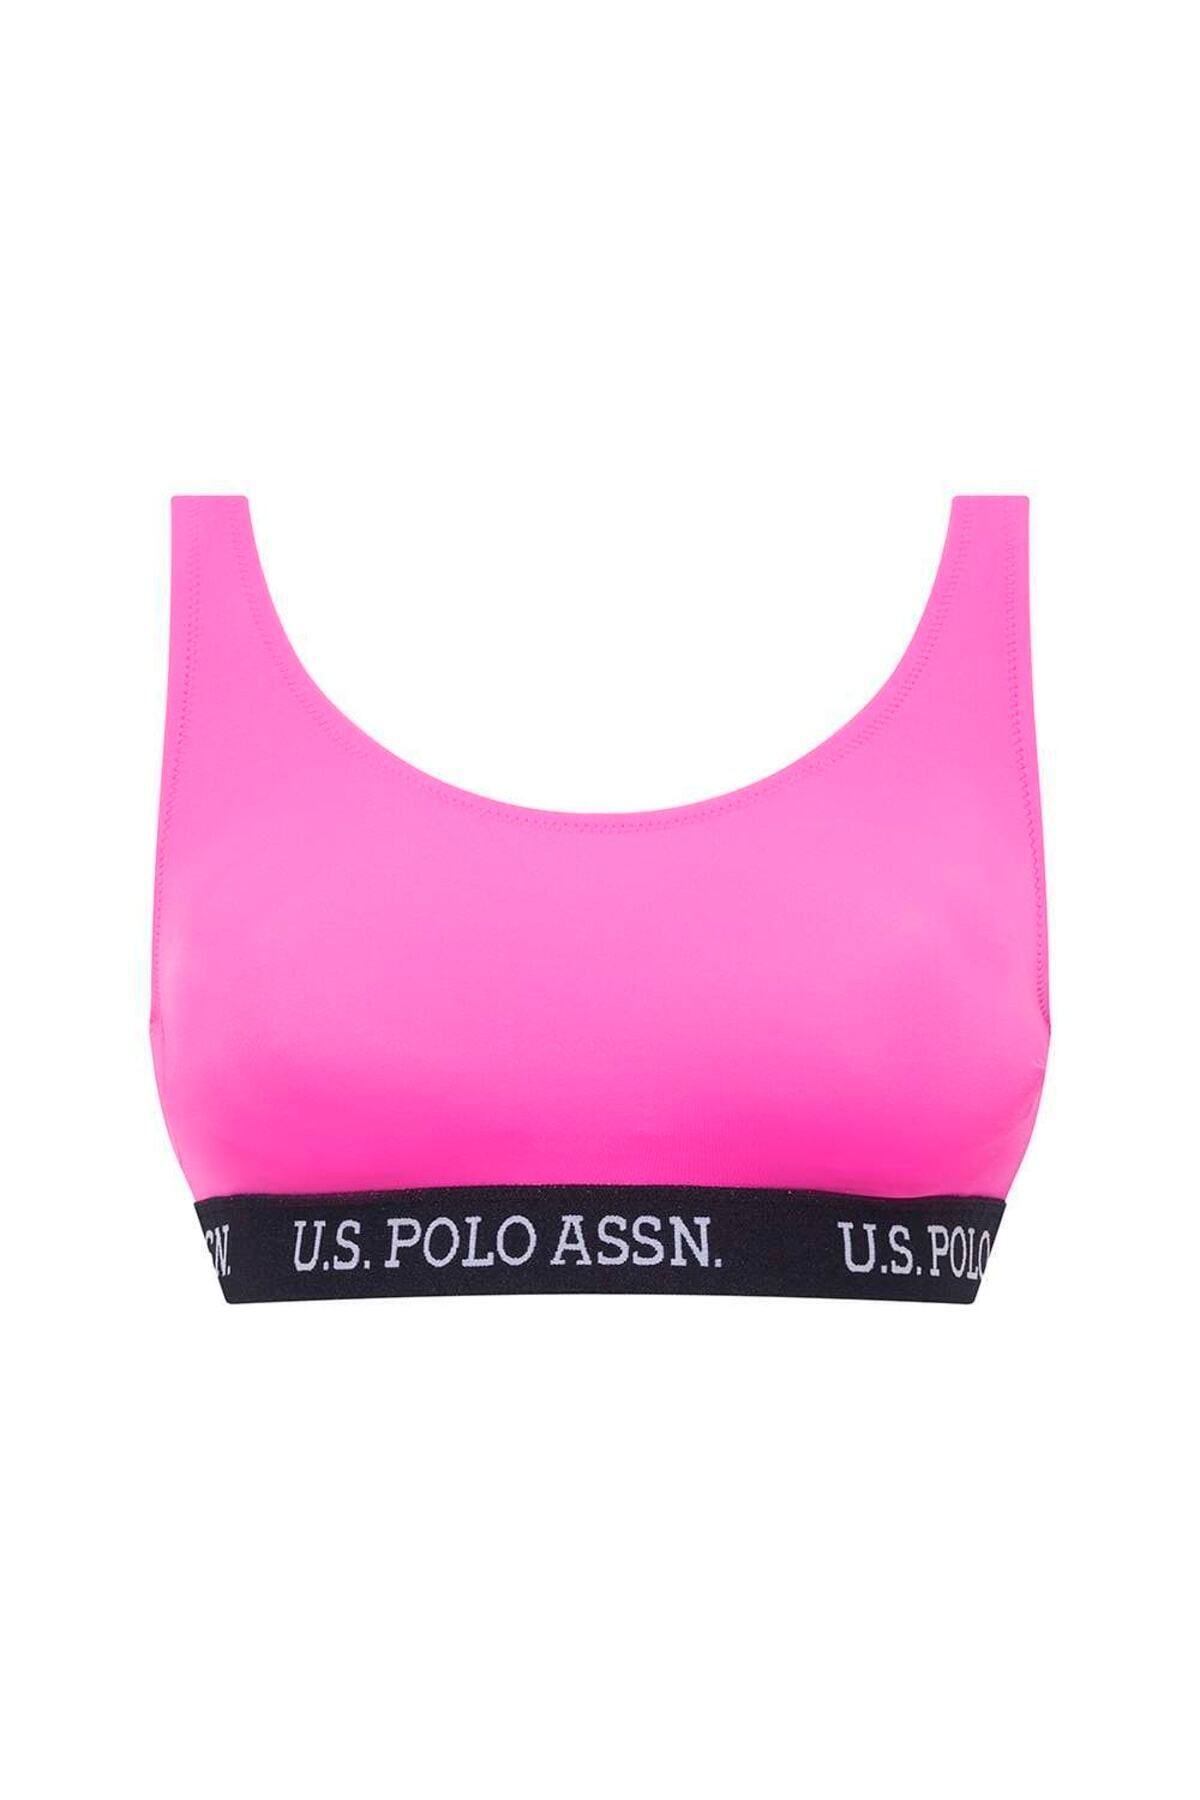 U.S. Polo Assn. Kadın Pembe U Yaka Bralet Bikini Üstü